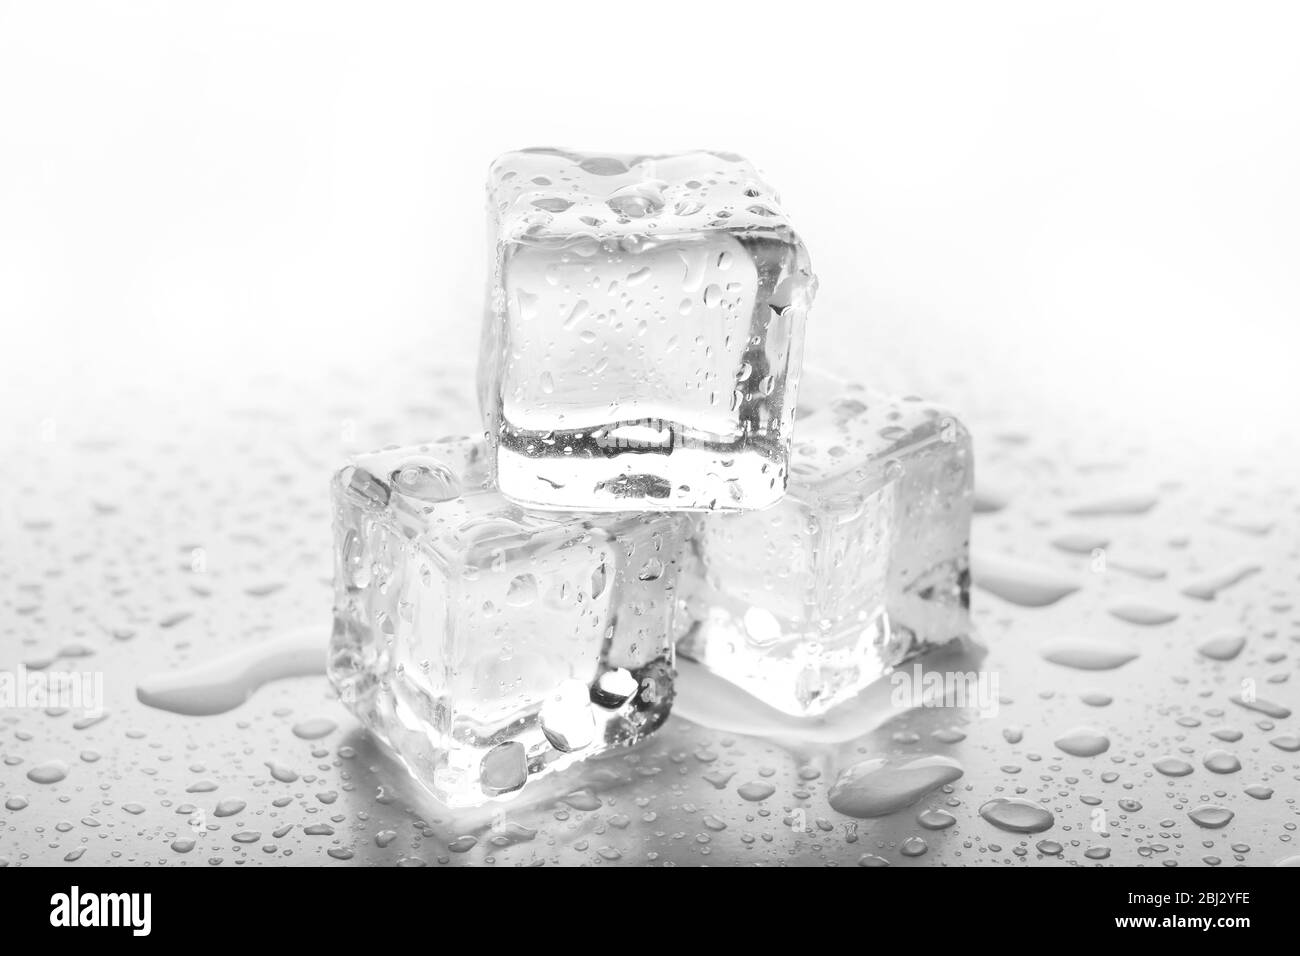 https://c8.alamy.com/comp/2BJ2YFE/melting-ice-cubes-on-grey-background-2BJ2YFE.jpg